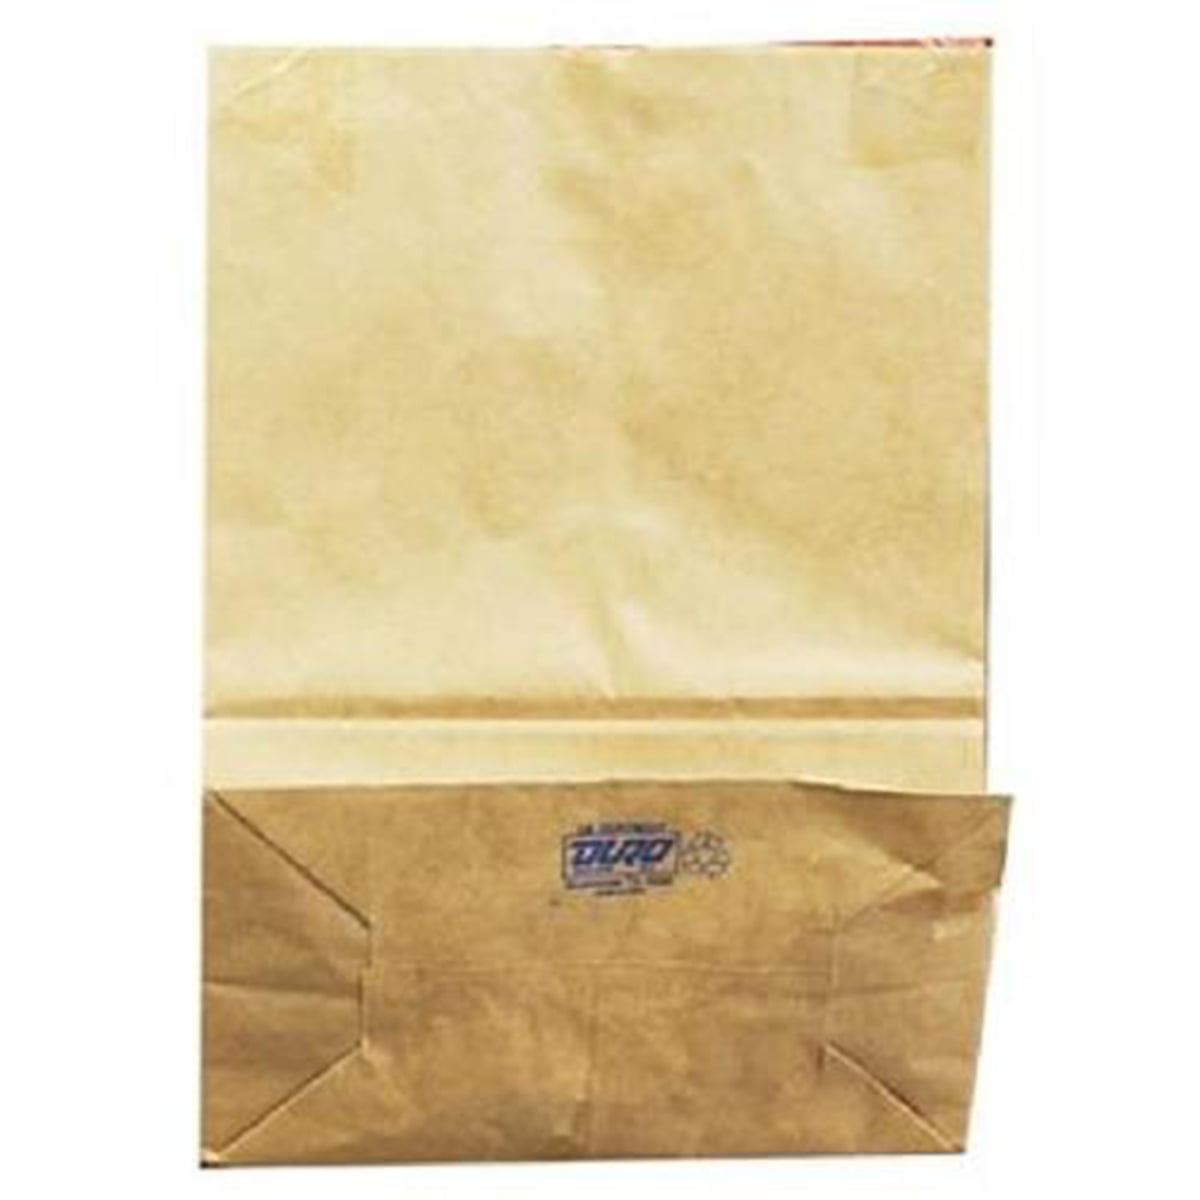 Standard 12 x 7 x 17 57lb Kraft General SK1657 1/6 BBL Paper Grocery Bag 500 Bags 